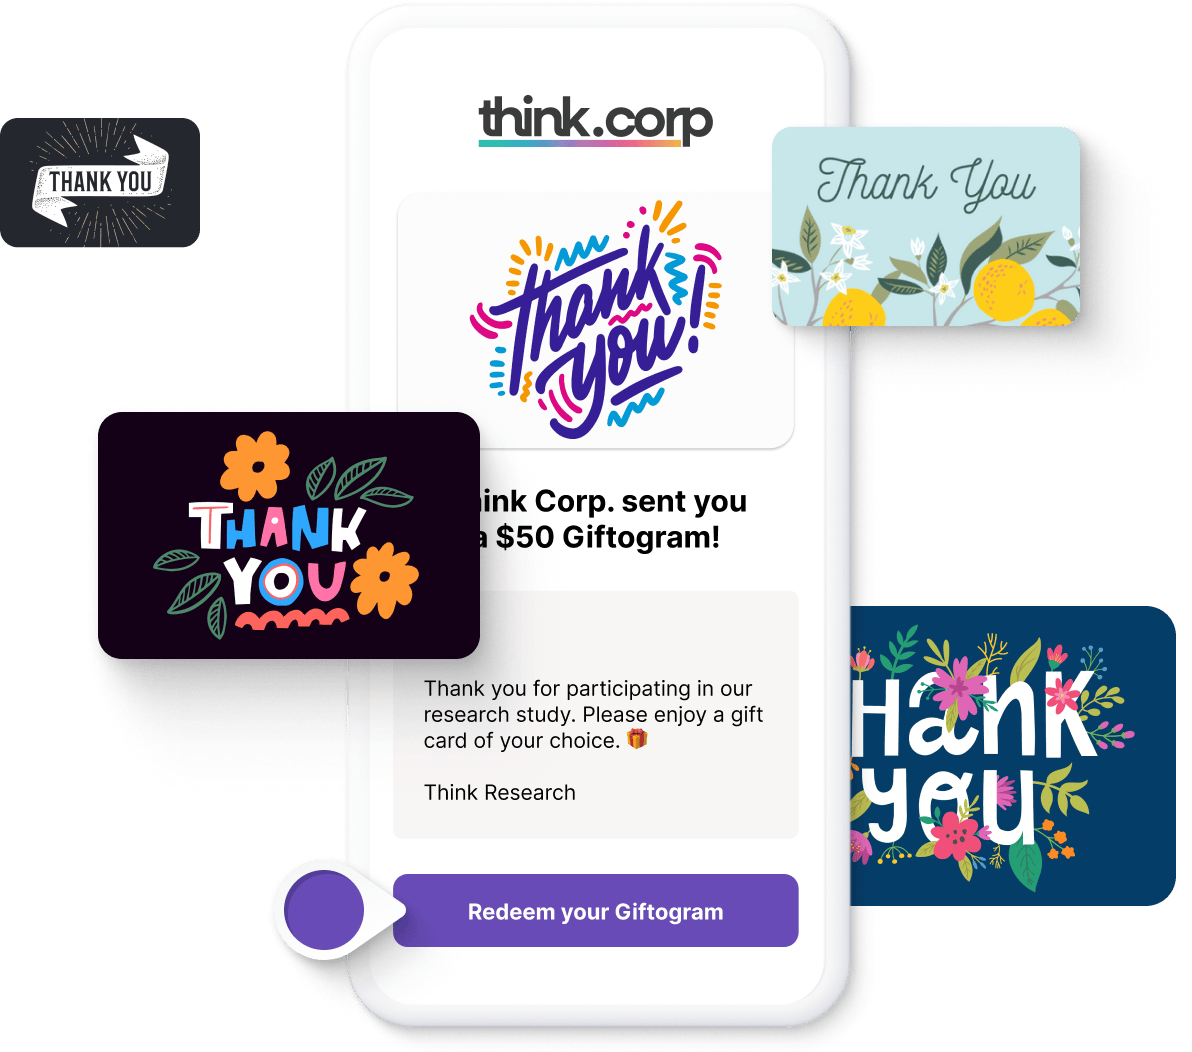 Custom branded gift card rewards